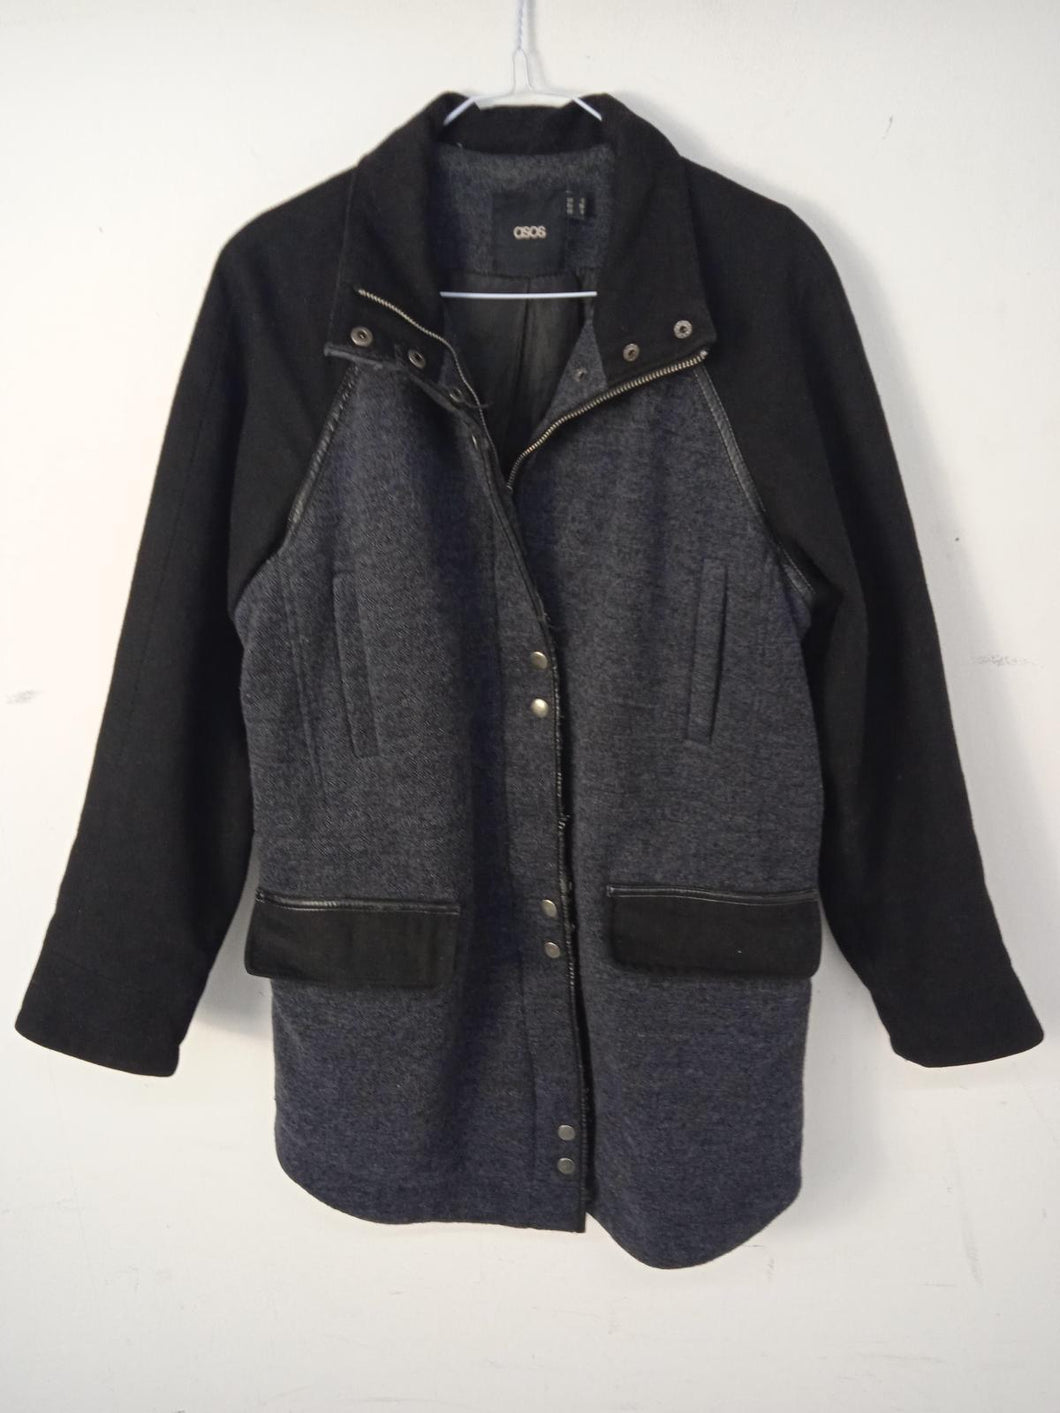 ASOS Ladies Black/Grey Wool Blend Long Sleeve Collared Overcoat Coat EU36 UK8